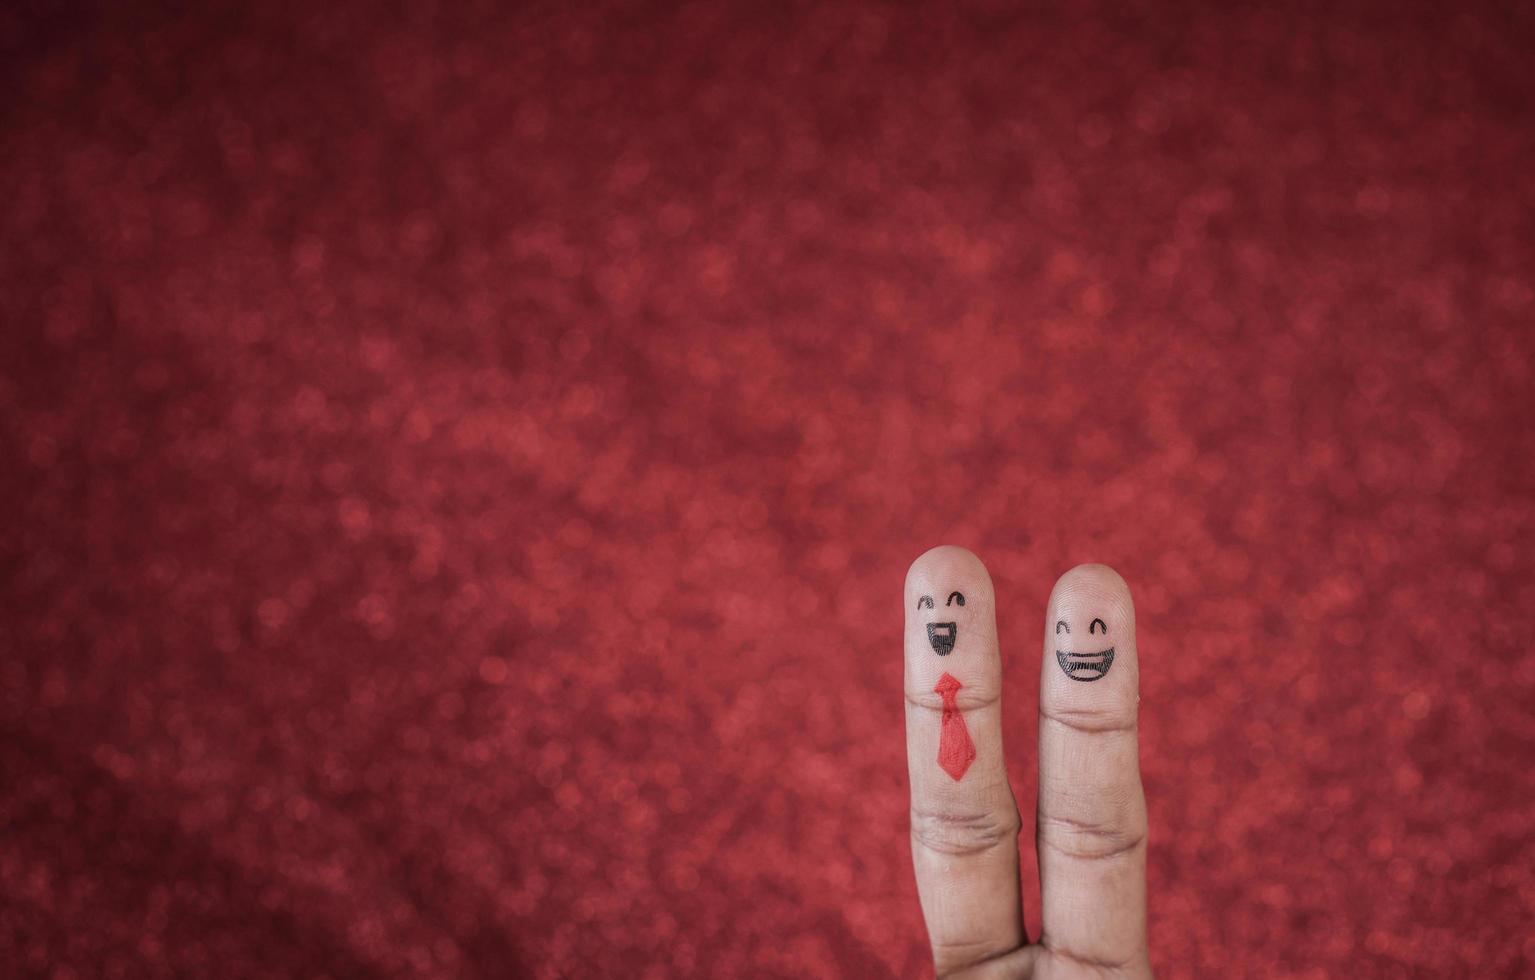 finger med känslor på röd bakgrund. foto